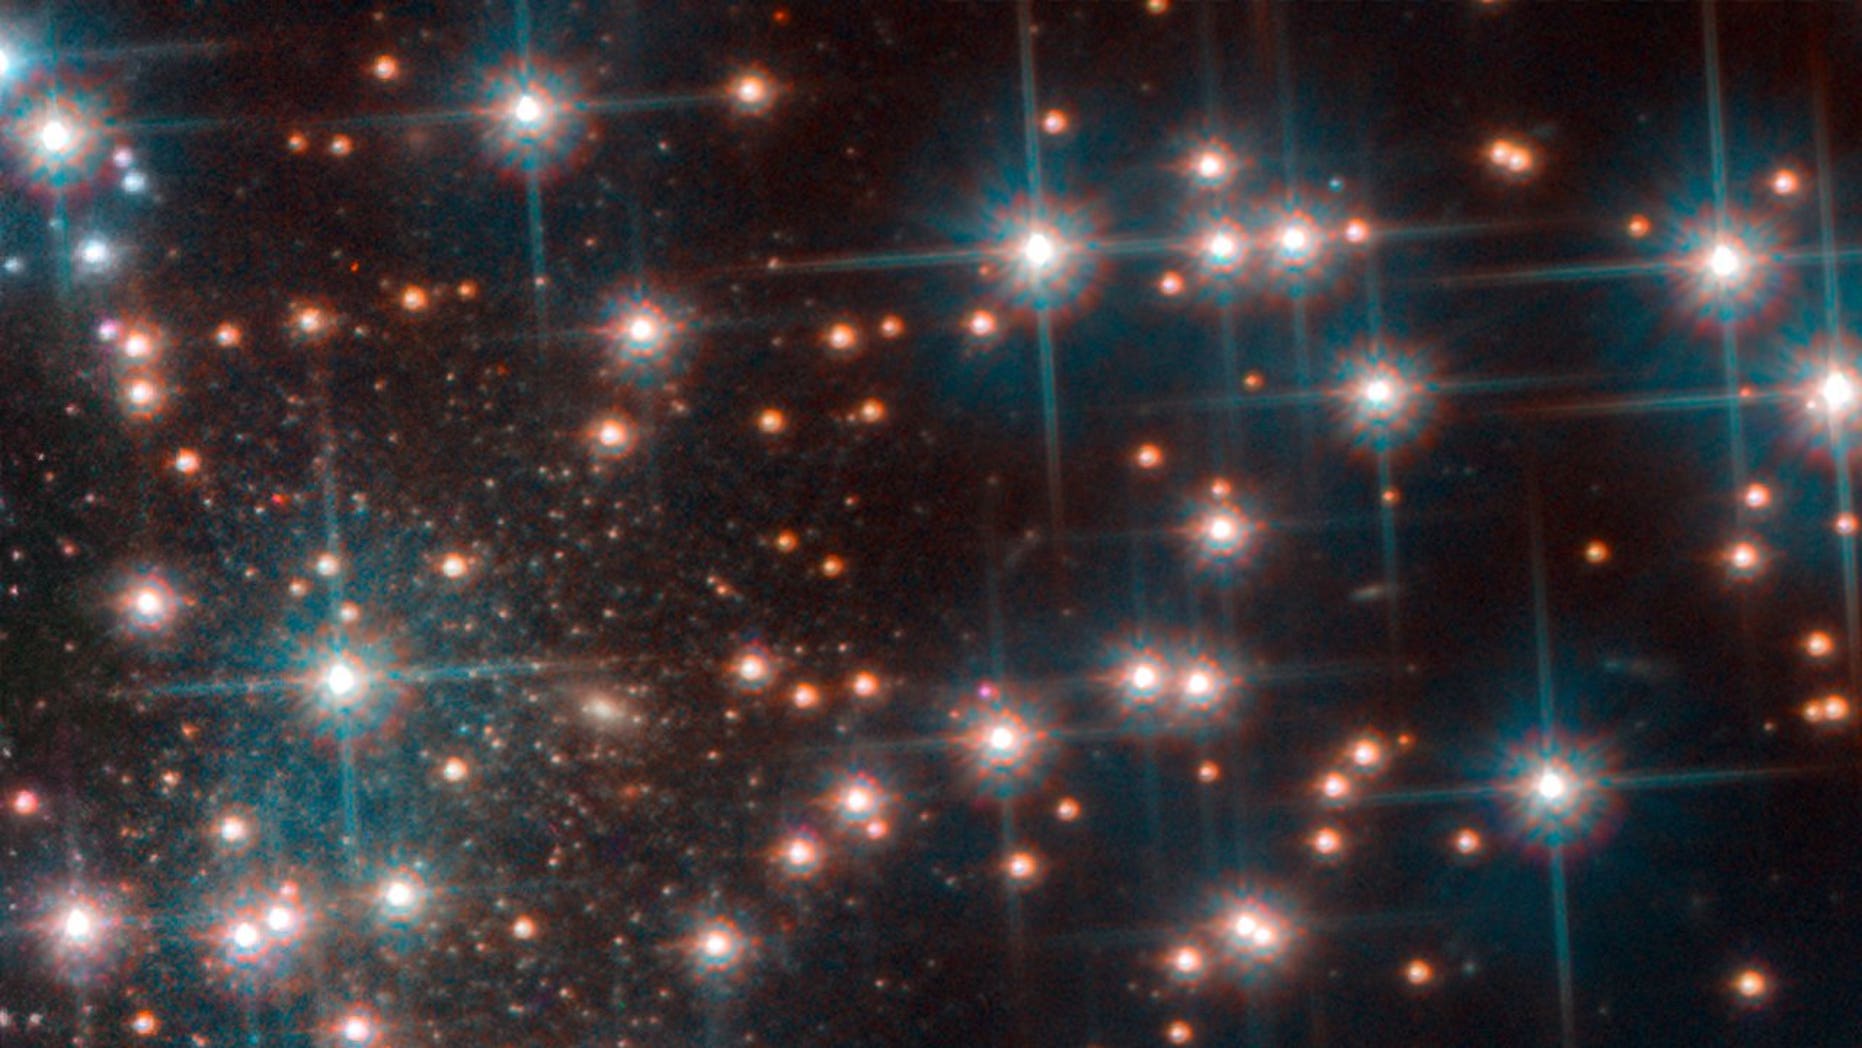 Hubble Telescope discovers 